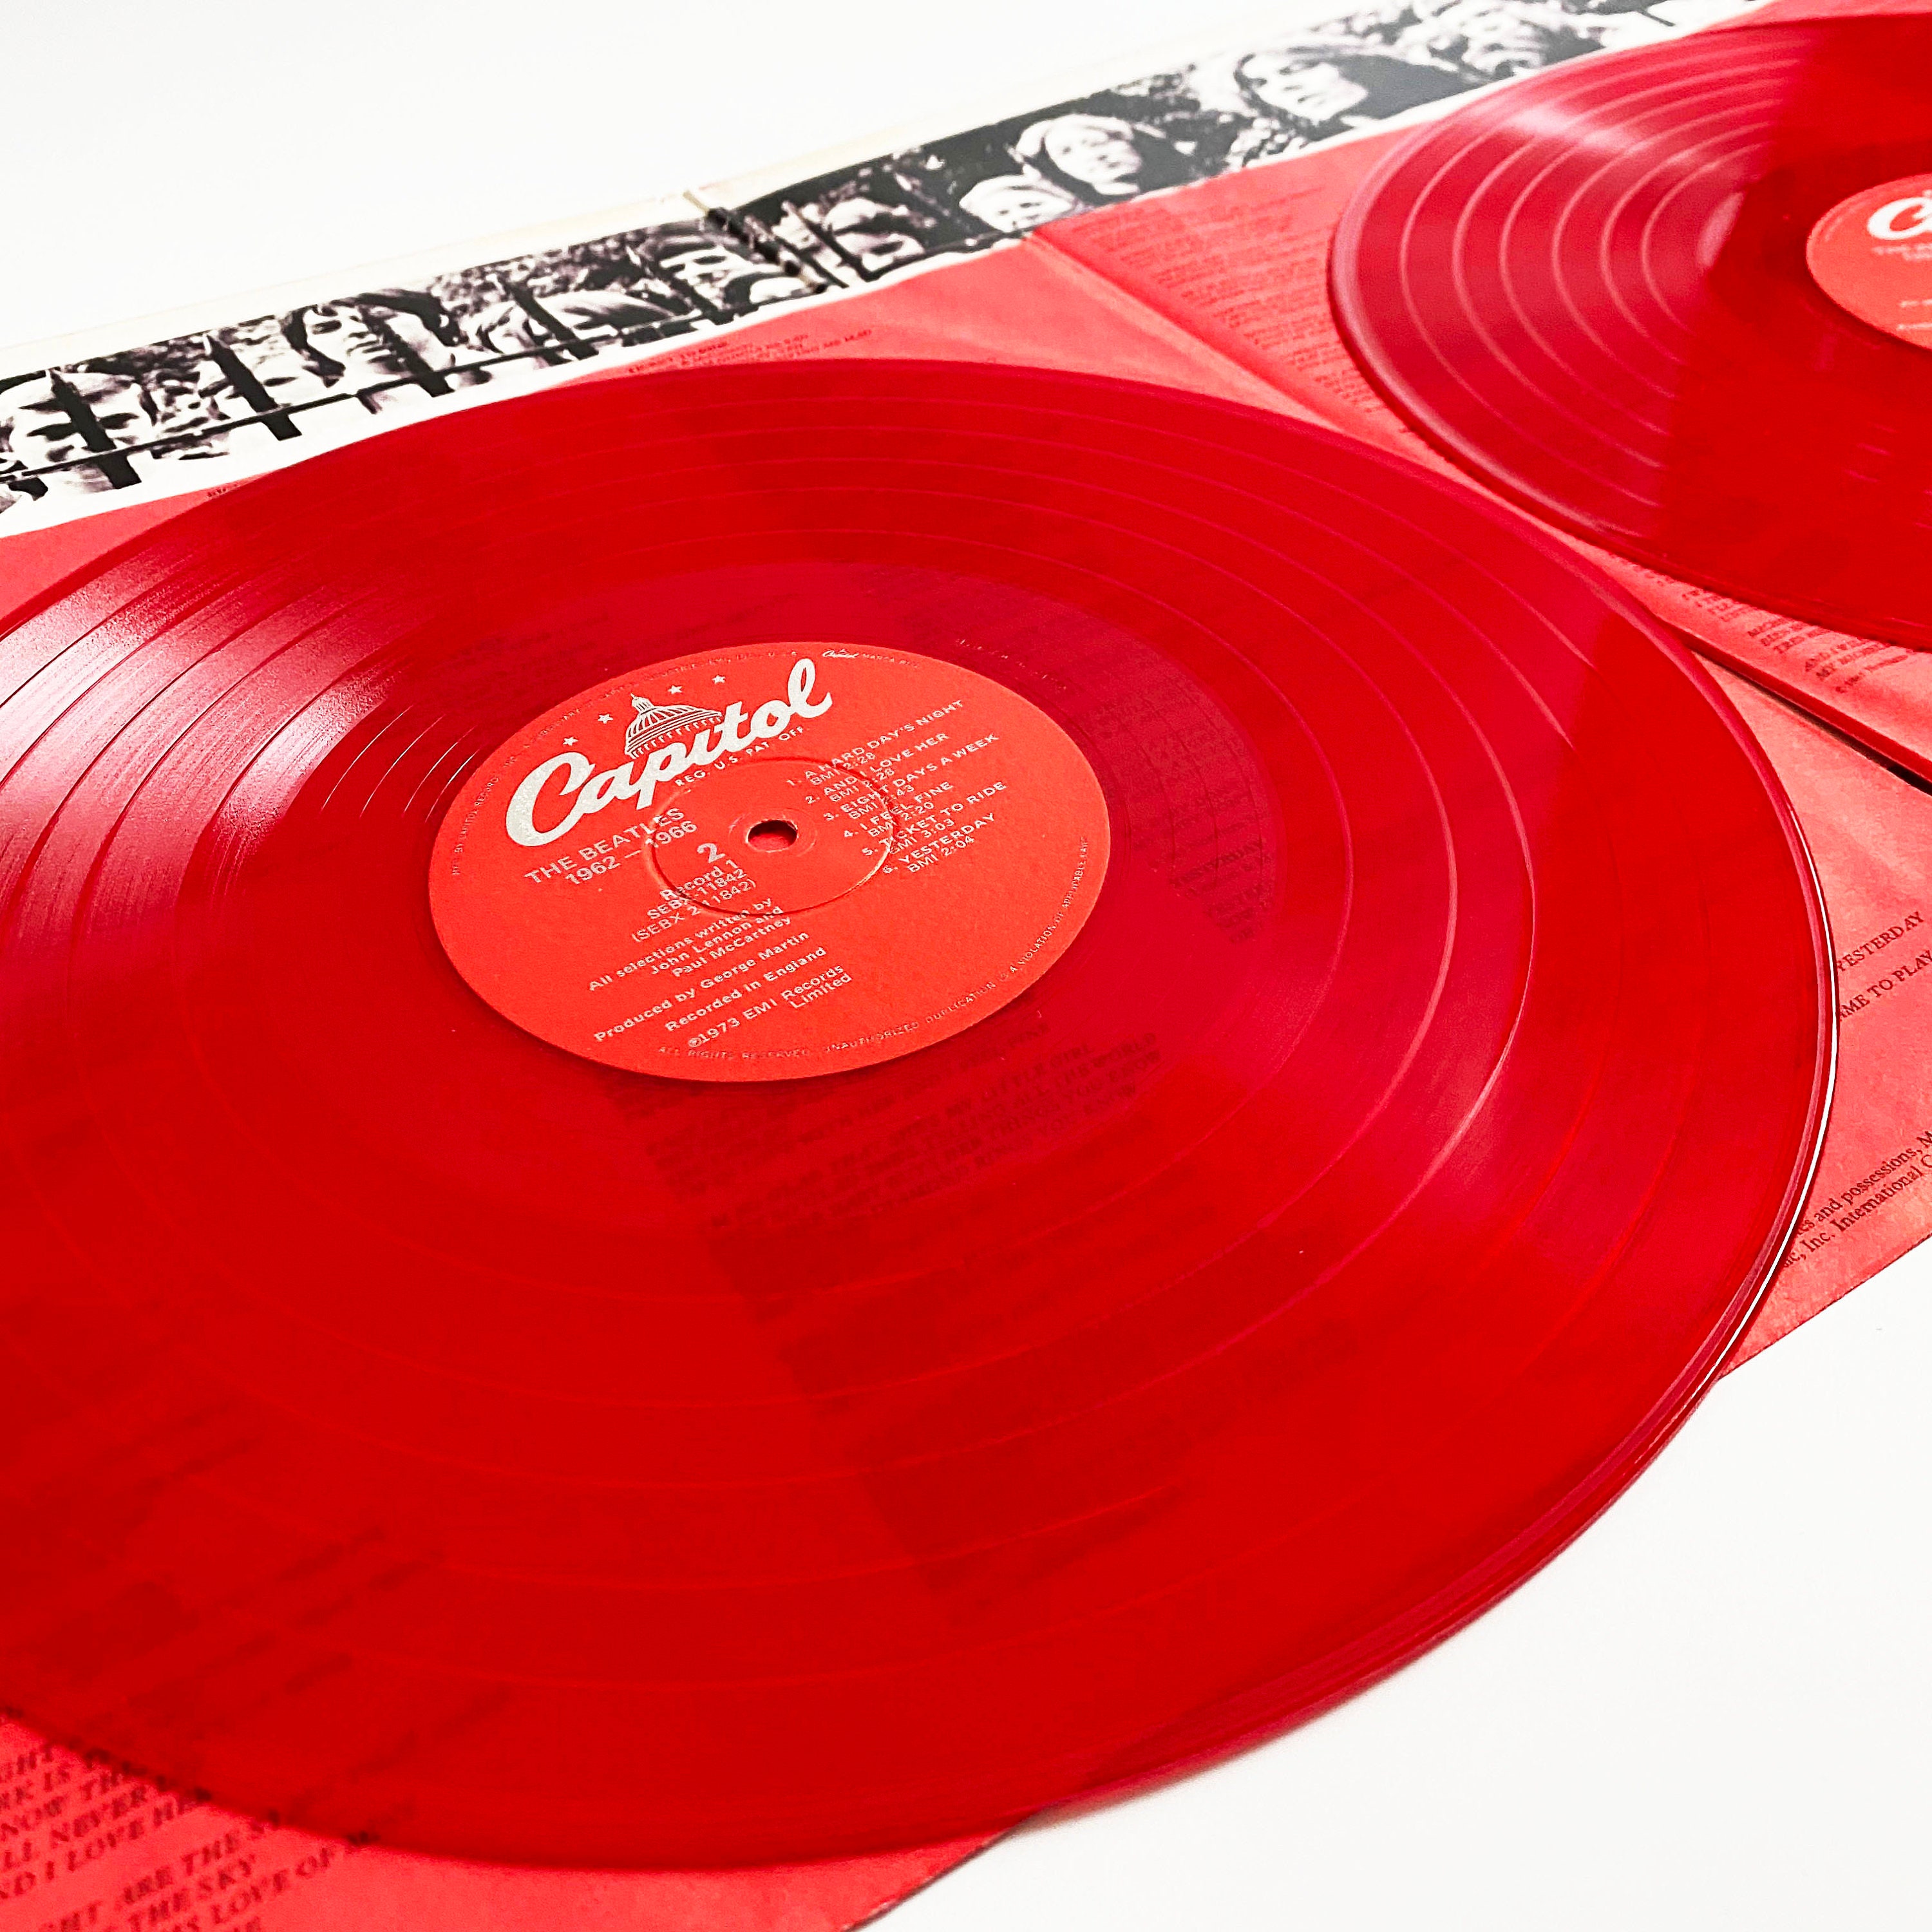 Vintage Red Vinyl the Beatles 19621966 Greatest Hits Gatefold